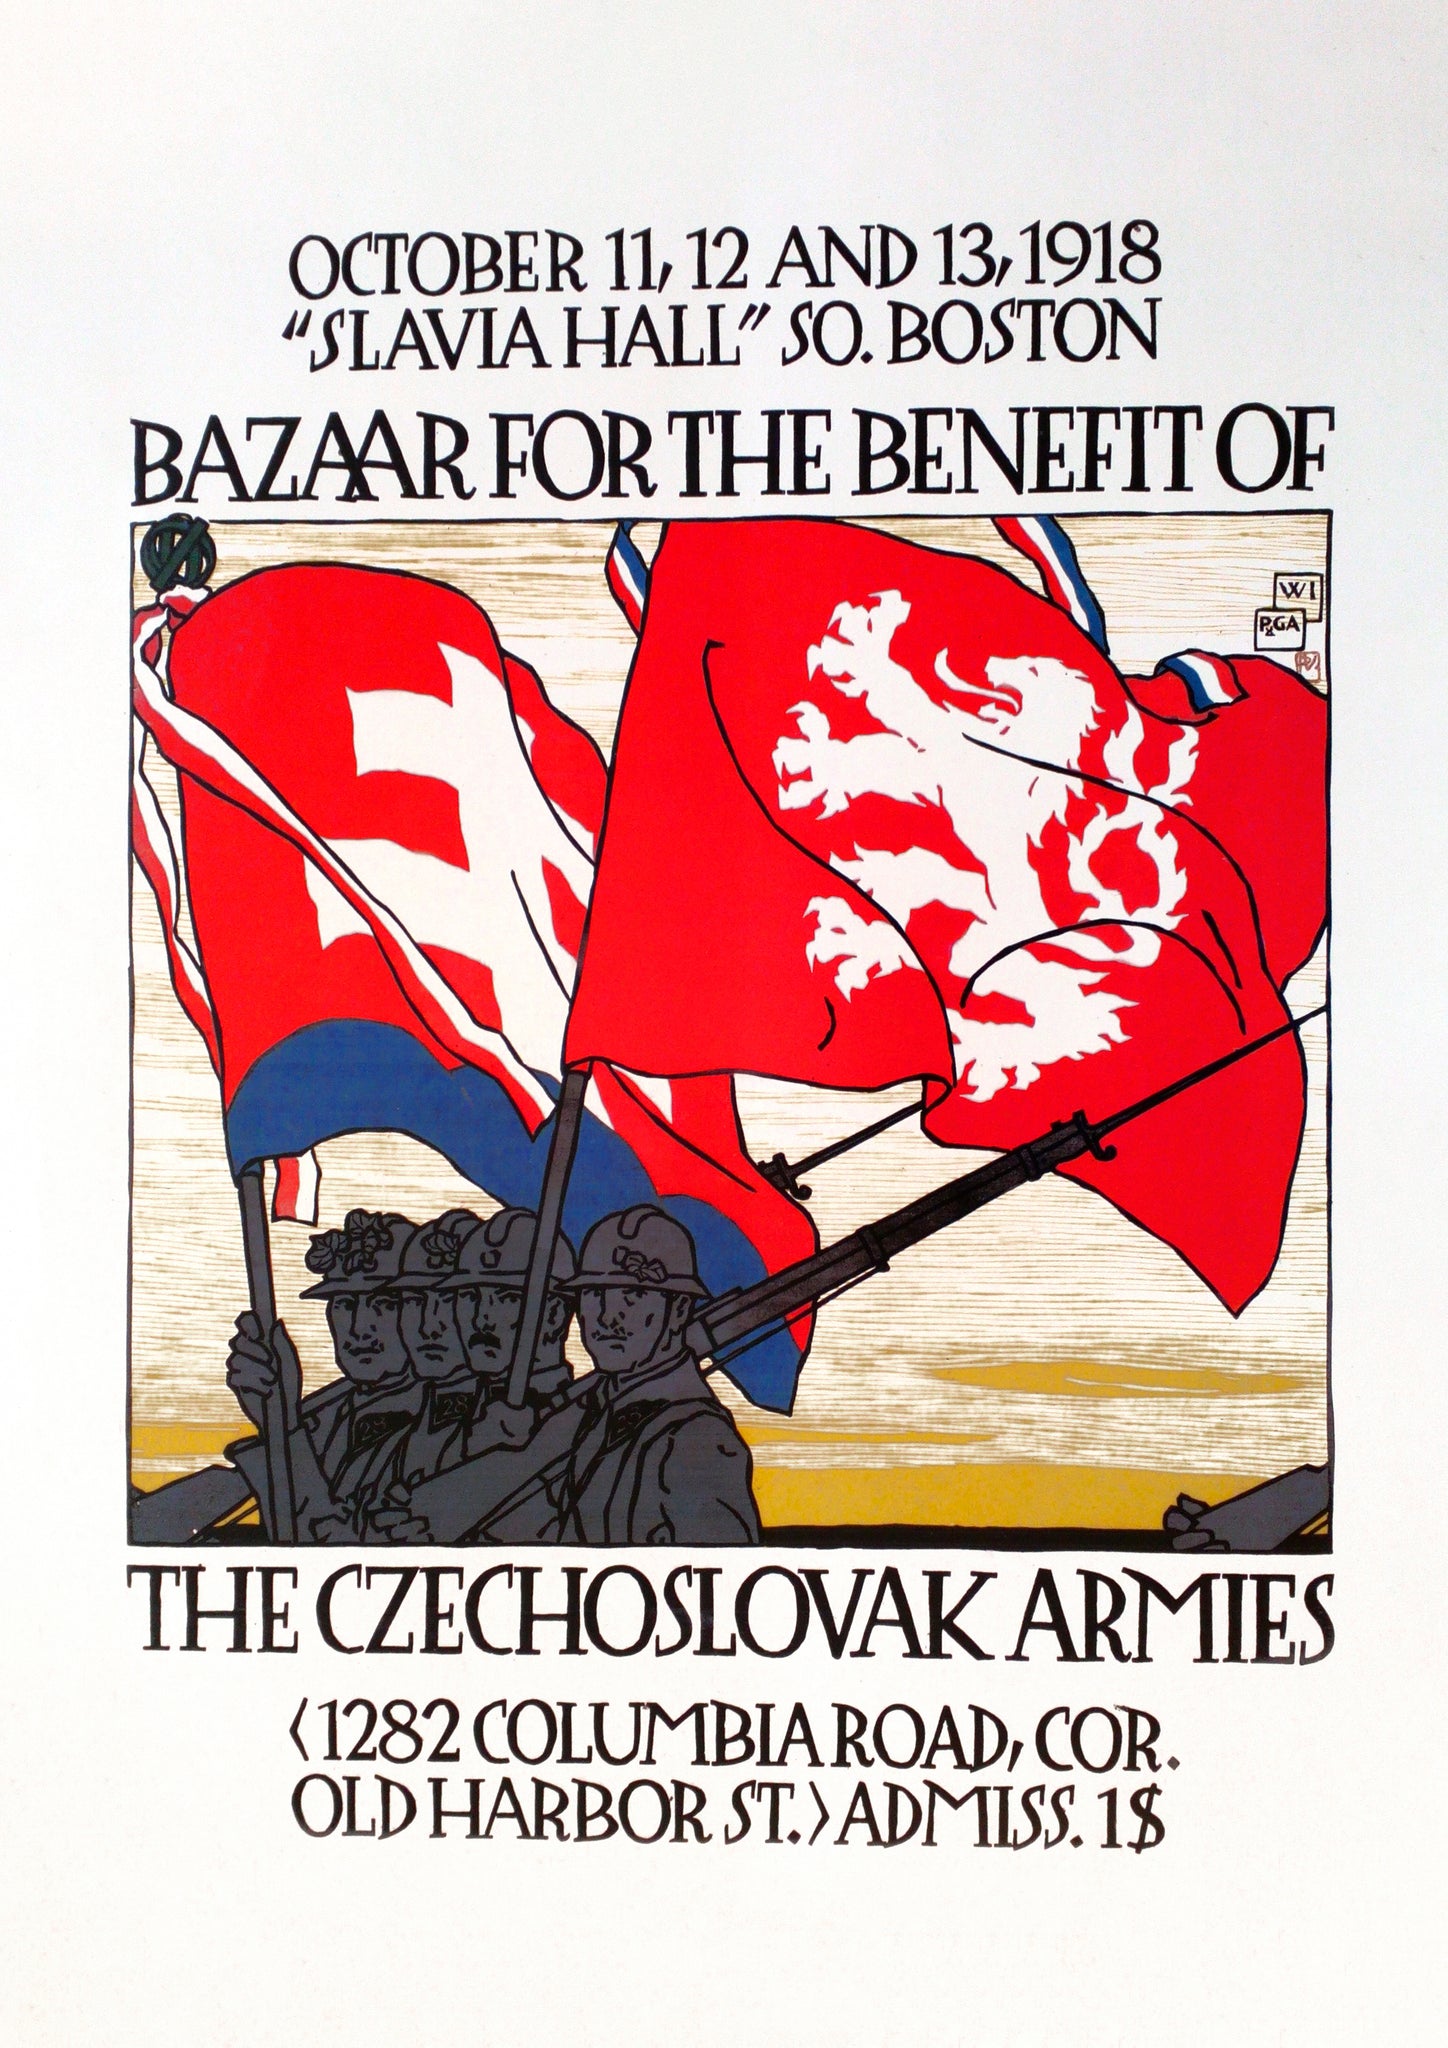 Bazaar for the benefit of the Czechoslovak armies — Czechoslovak World War One poster